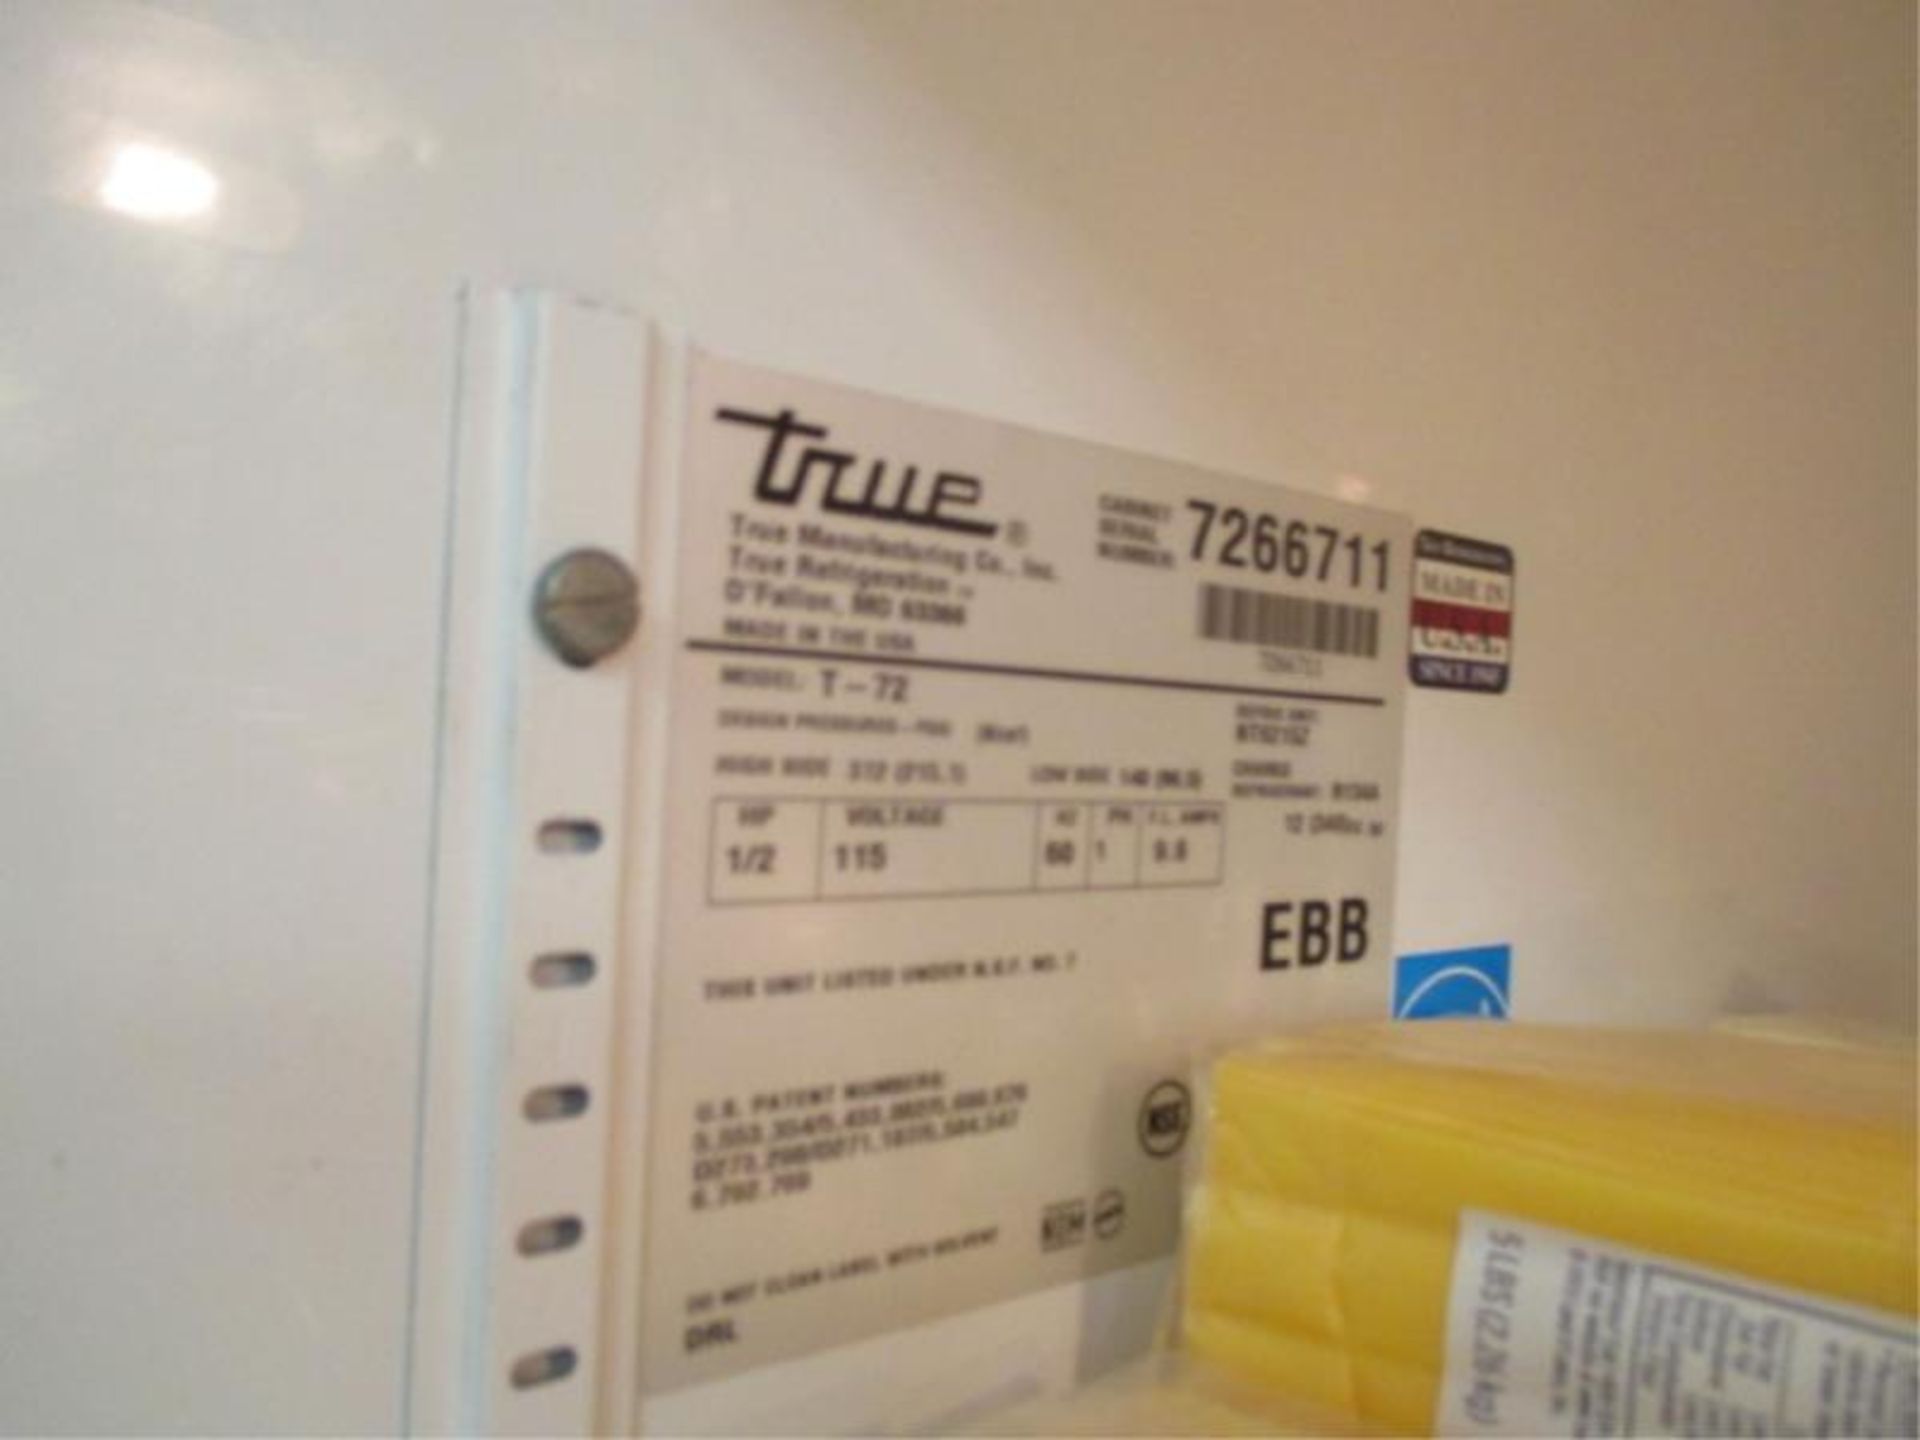 Three Door Reach In Refrigerator by True, Model: T-72, SN: 7266711 - Image 3 of 3